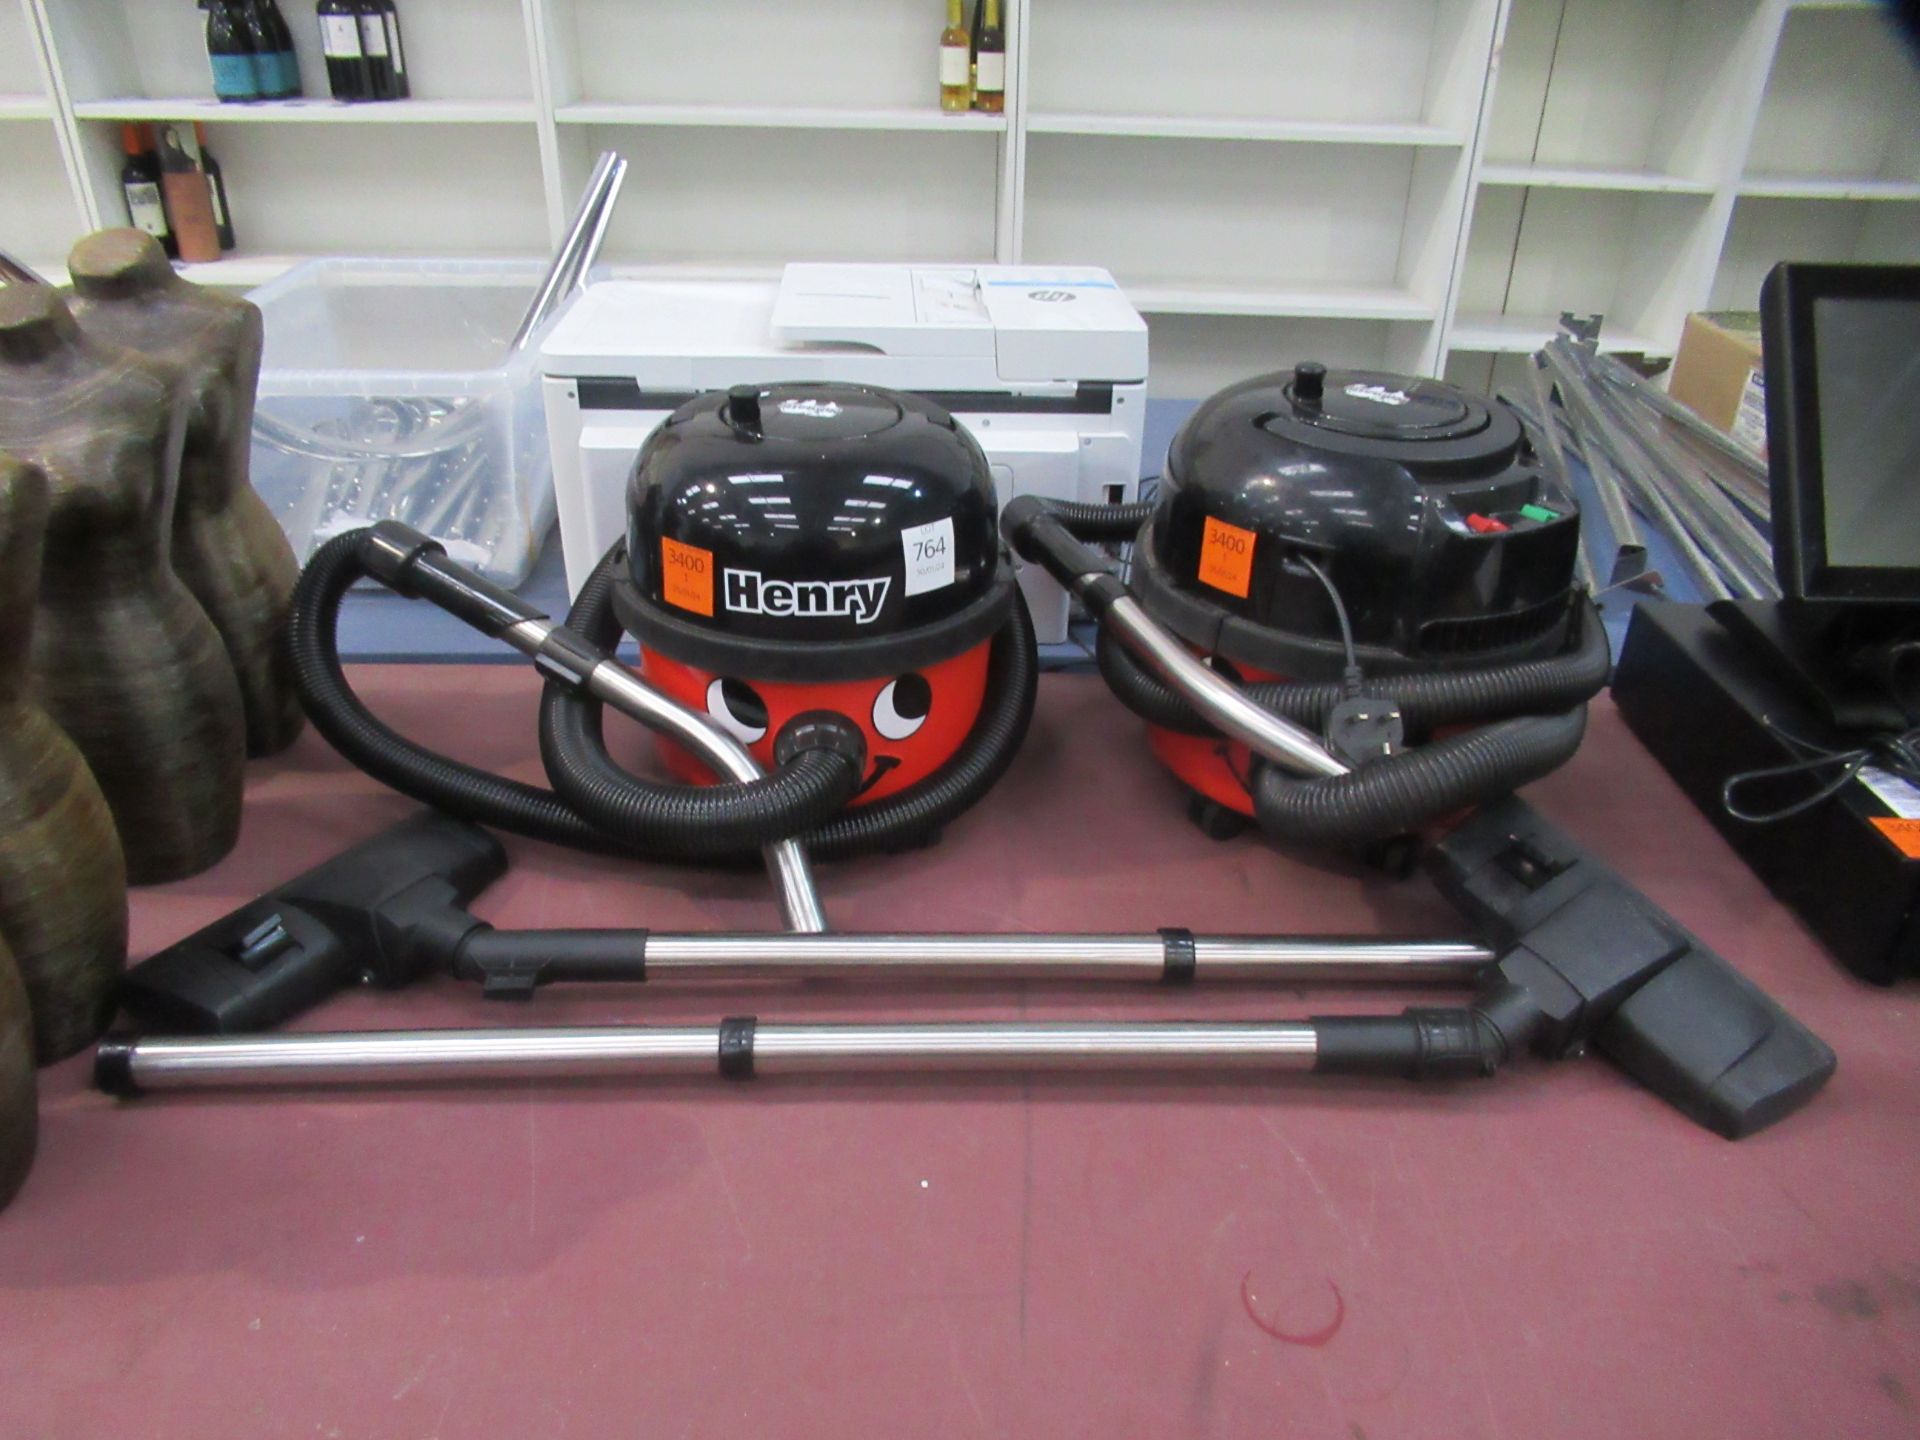 2x Numatic Henry Vacuum Cleaners